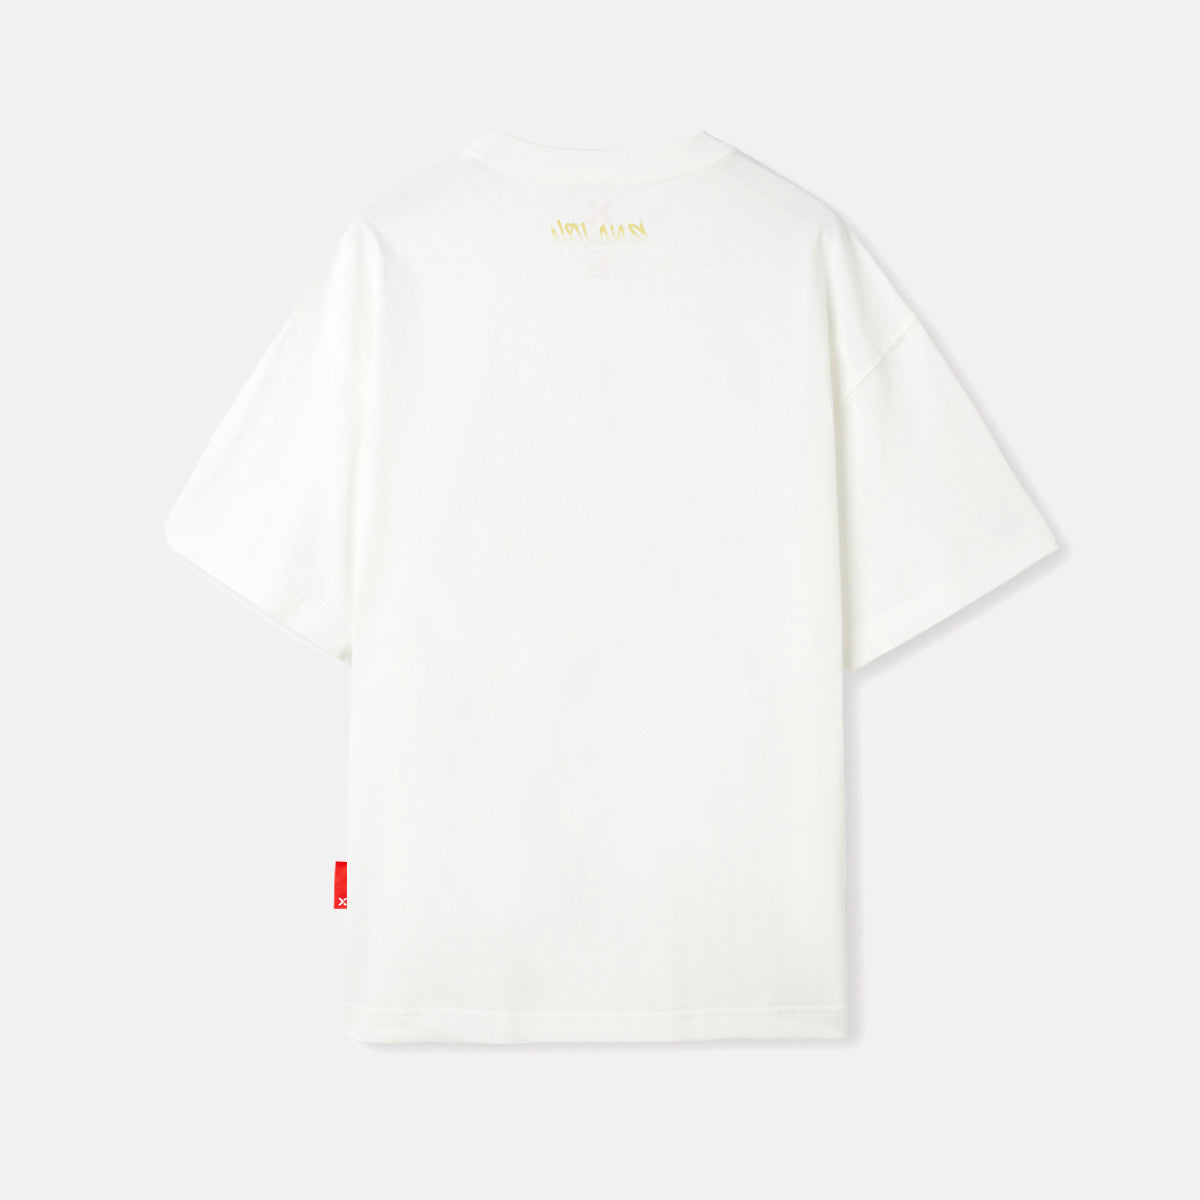 NXT AZUKI No.4589 White T-Shirt